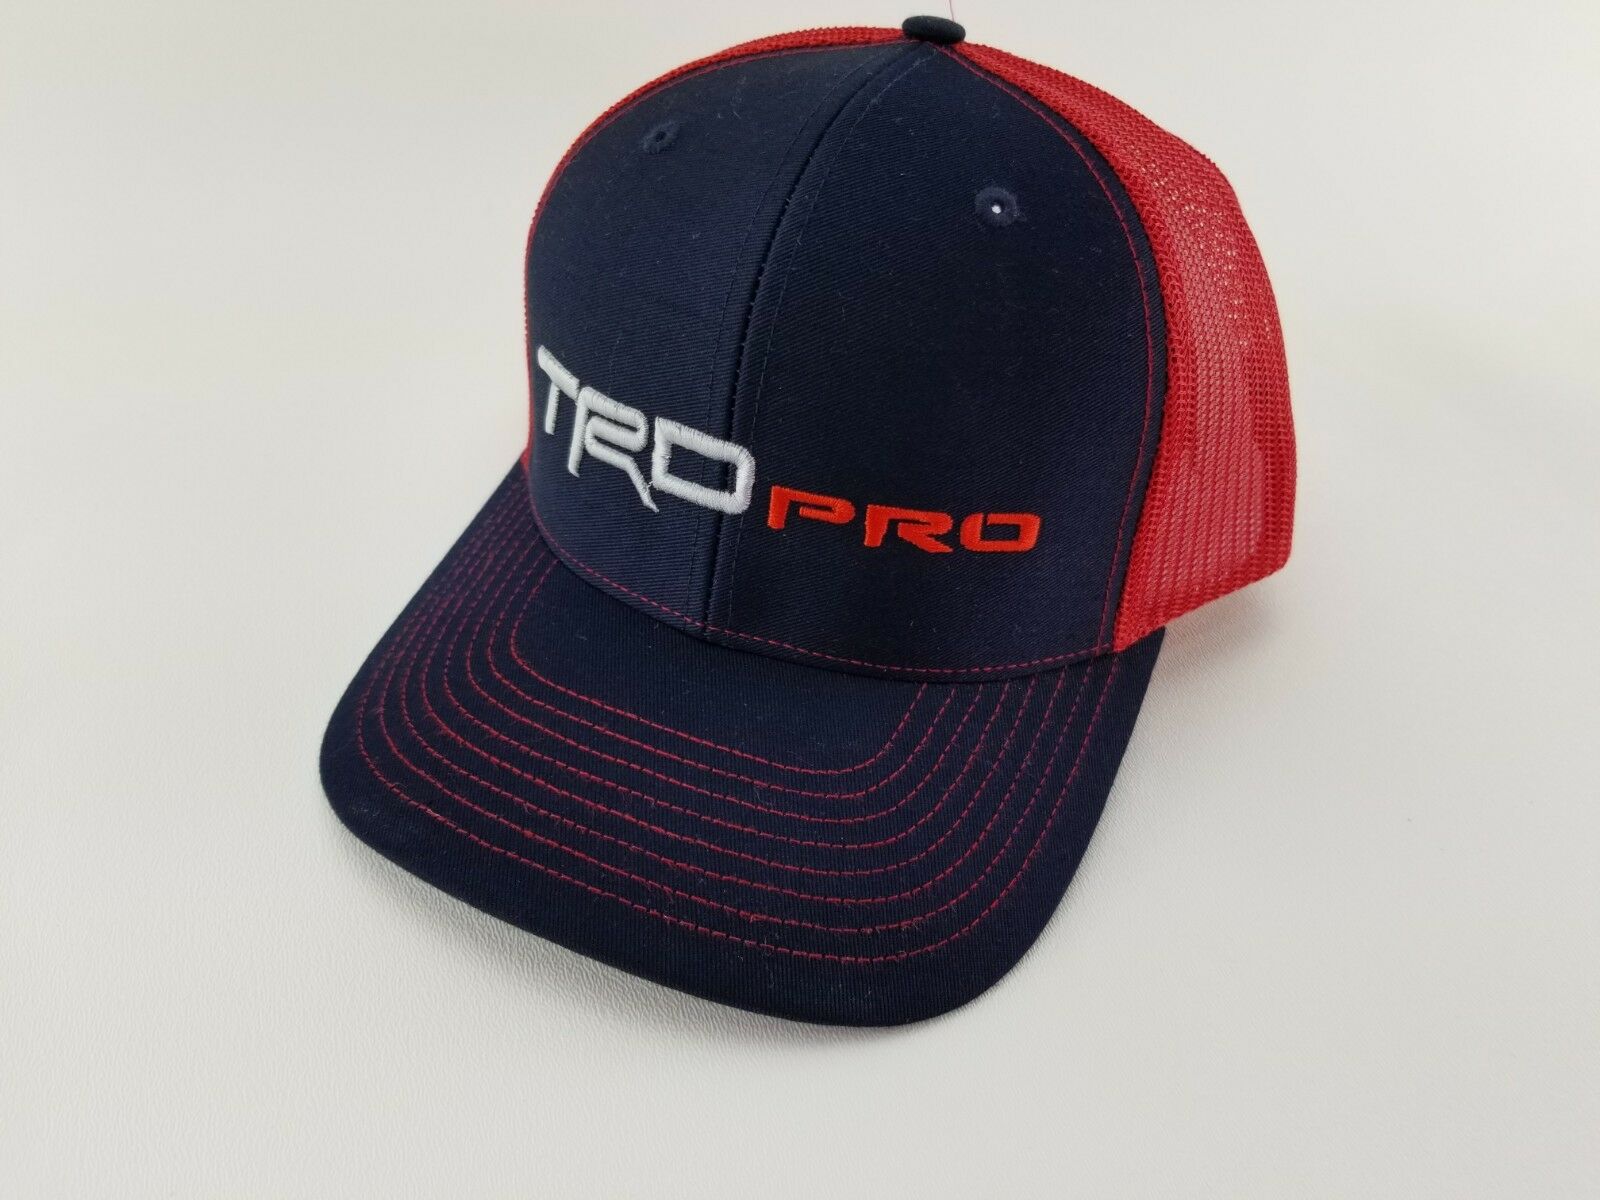 Trd Pro - Toyota - 4-runner, Tundra, Tacoma, Trucker Ball Cap Hat!